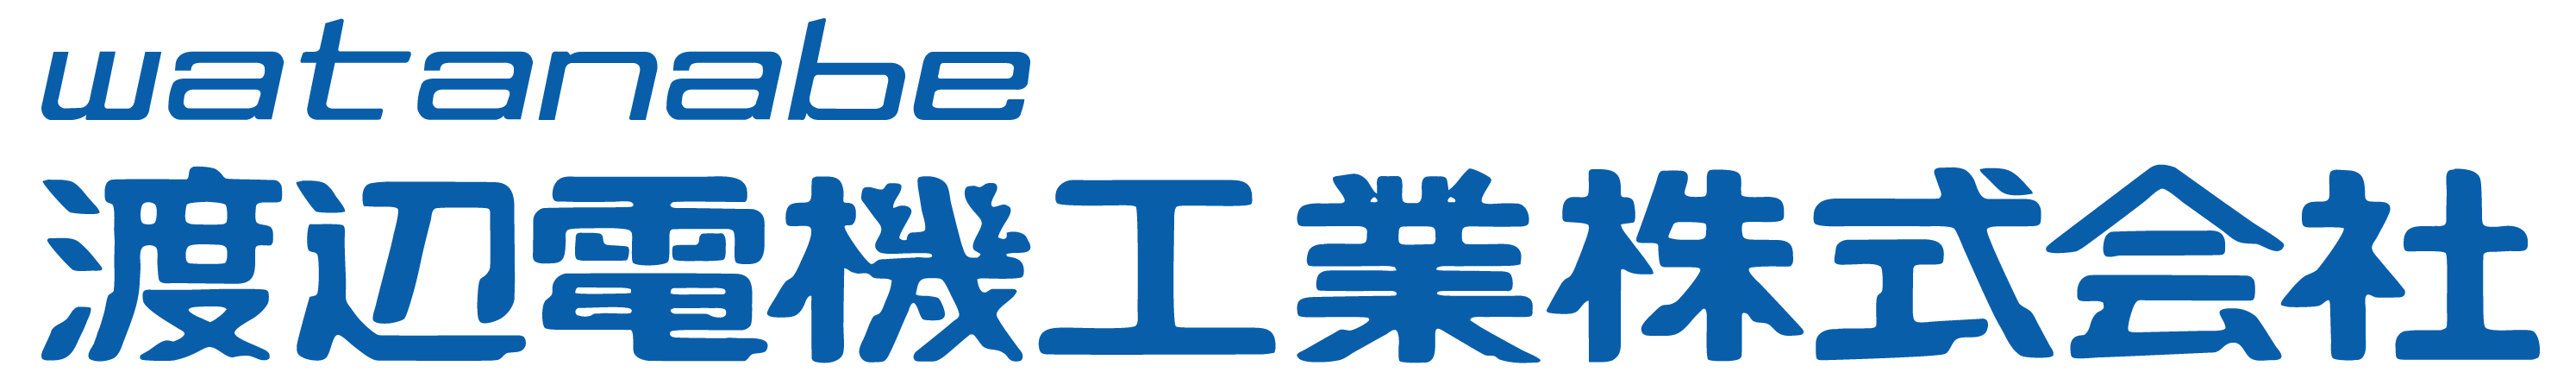 Watanabe Electric Industry Co.Ltd.